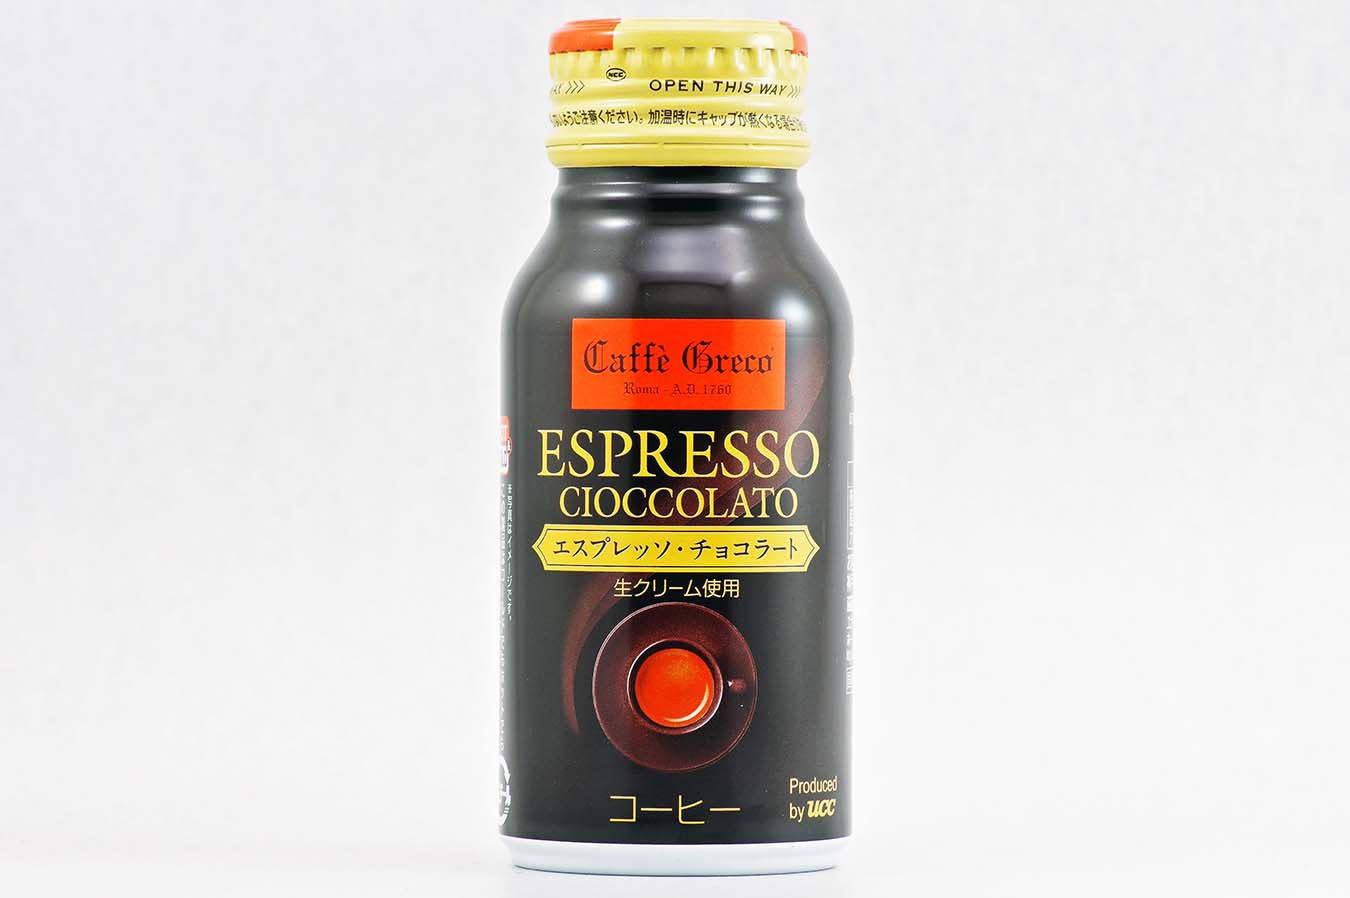 Caffè Greco エスプレッソ・チョコラート 2015年5月